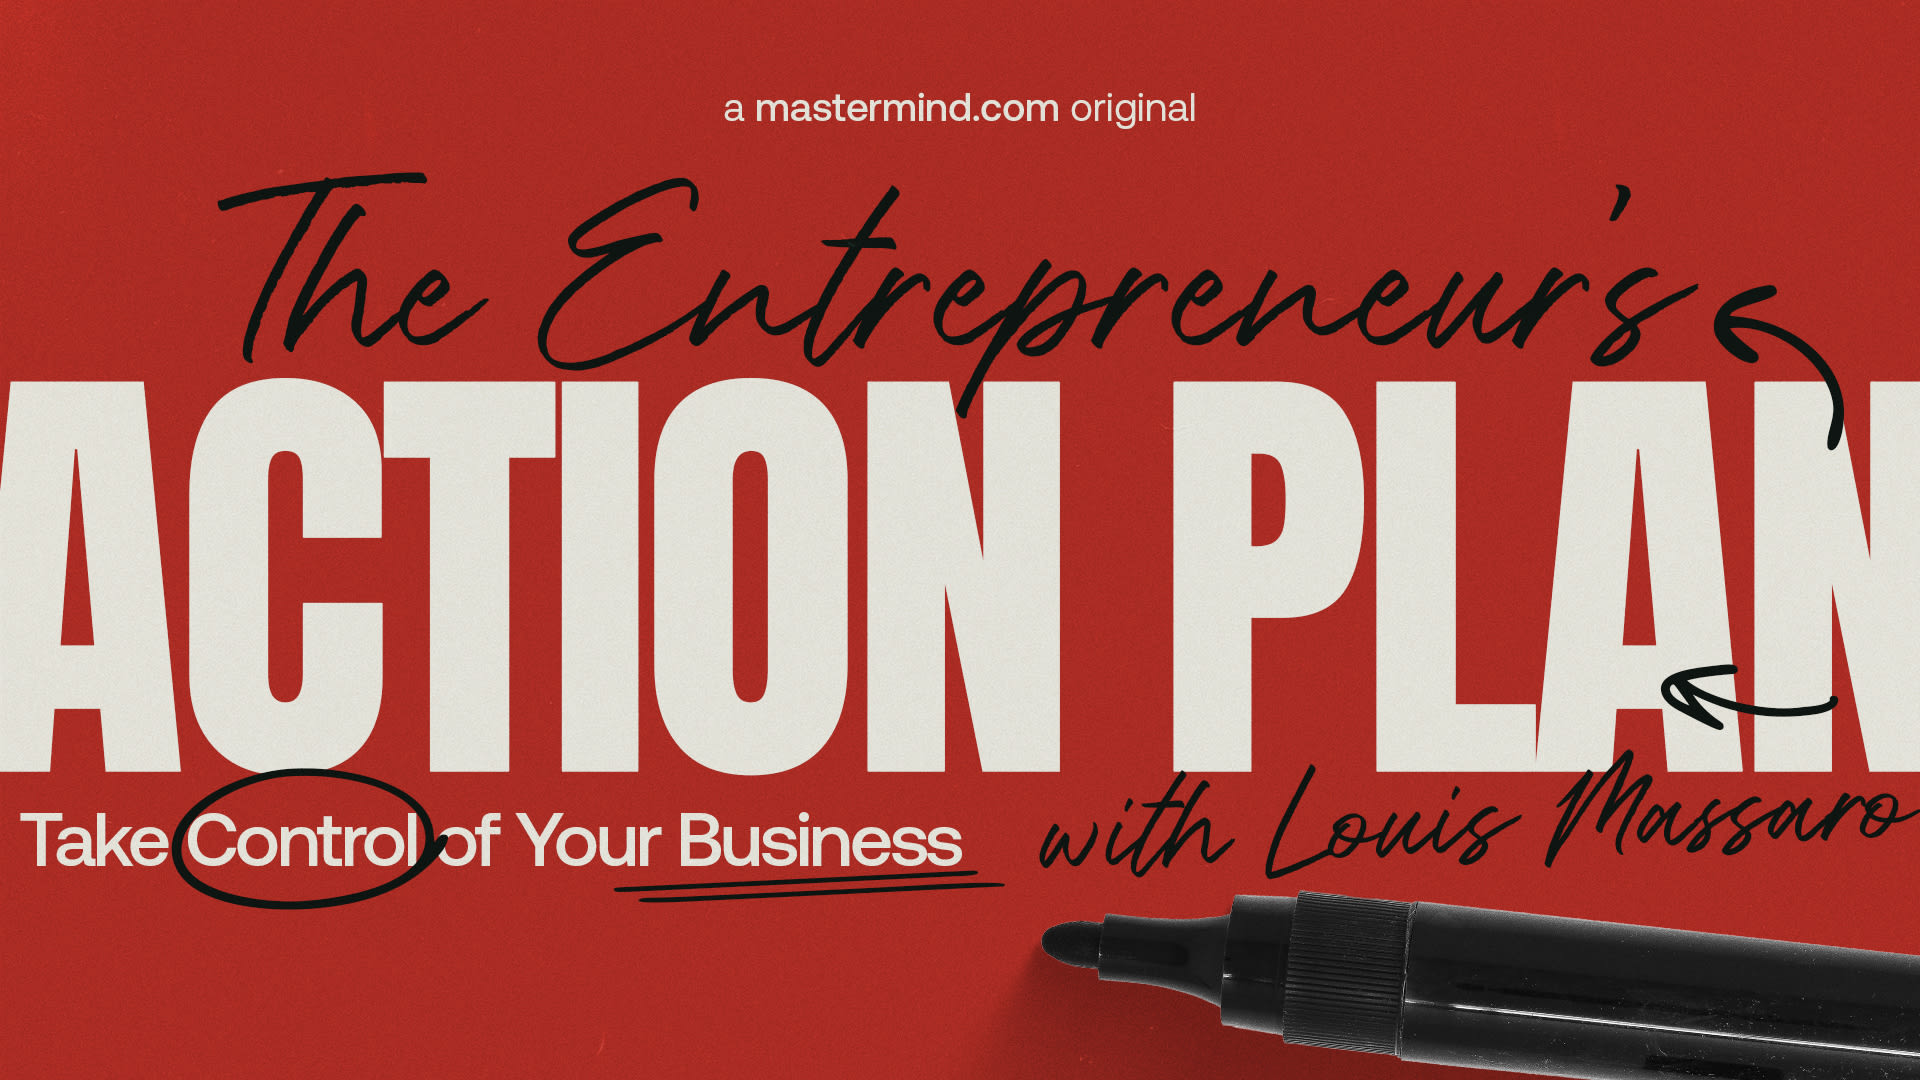 The_Entrepreneur_Action_Plan_With_Louis_Massaro16_9_V1_1_nl63nr